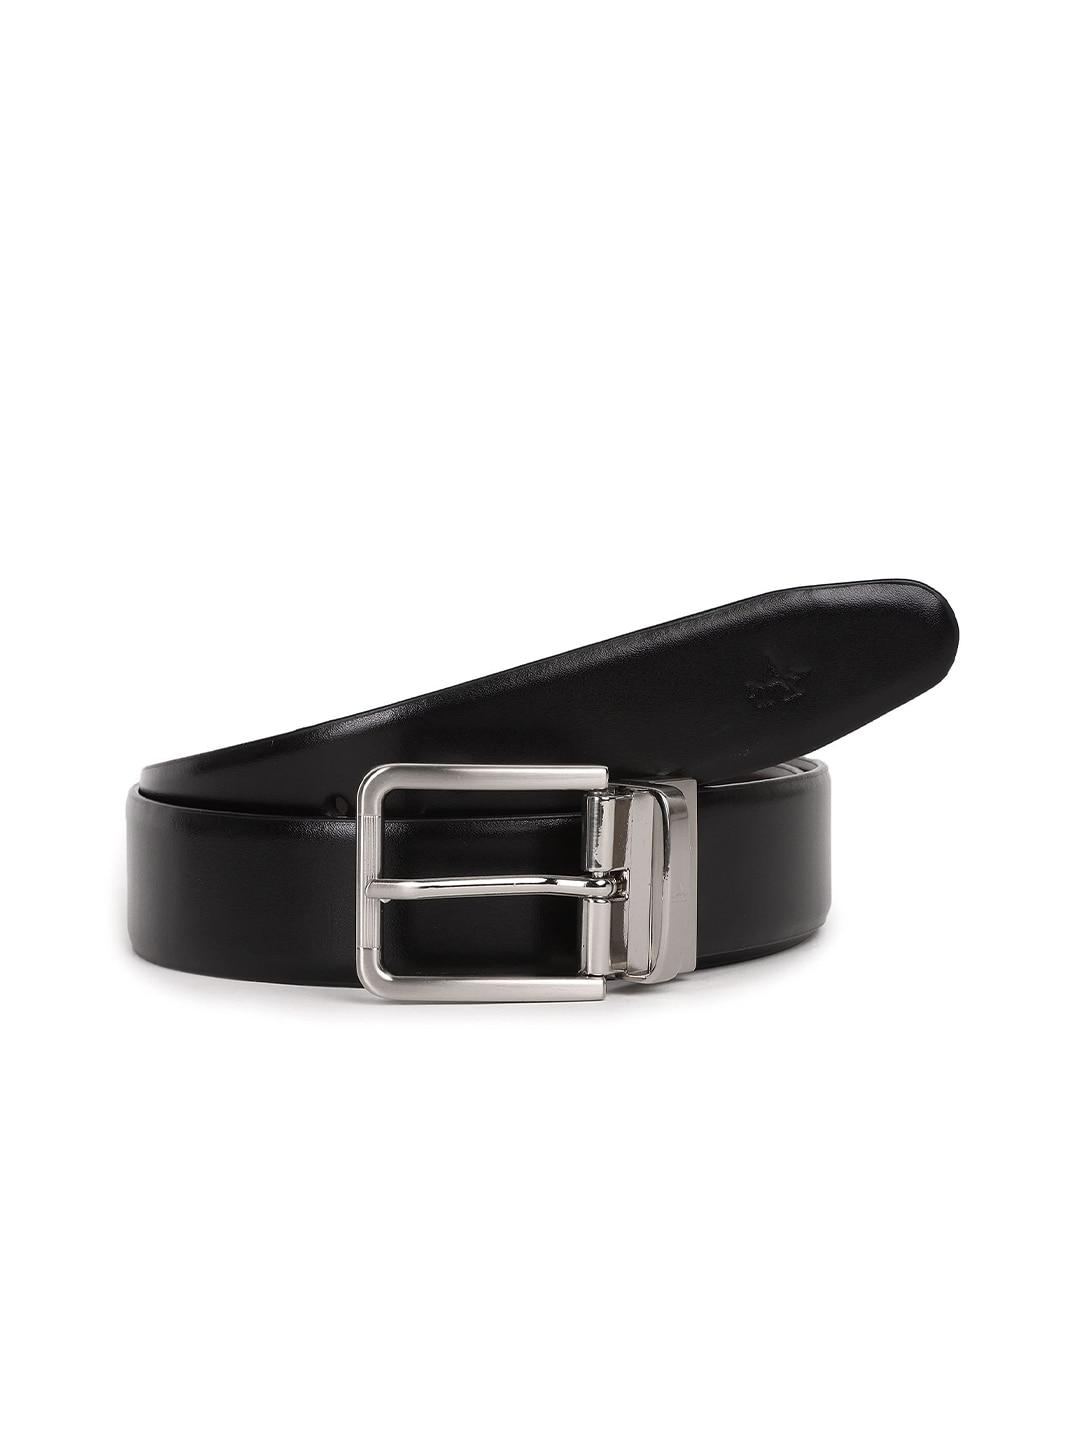 arrow-men-leather-reversible-formal-belt